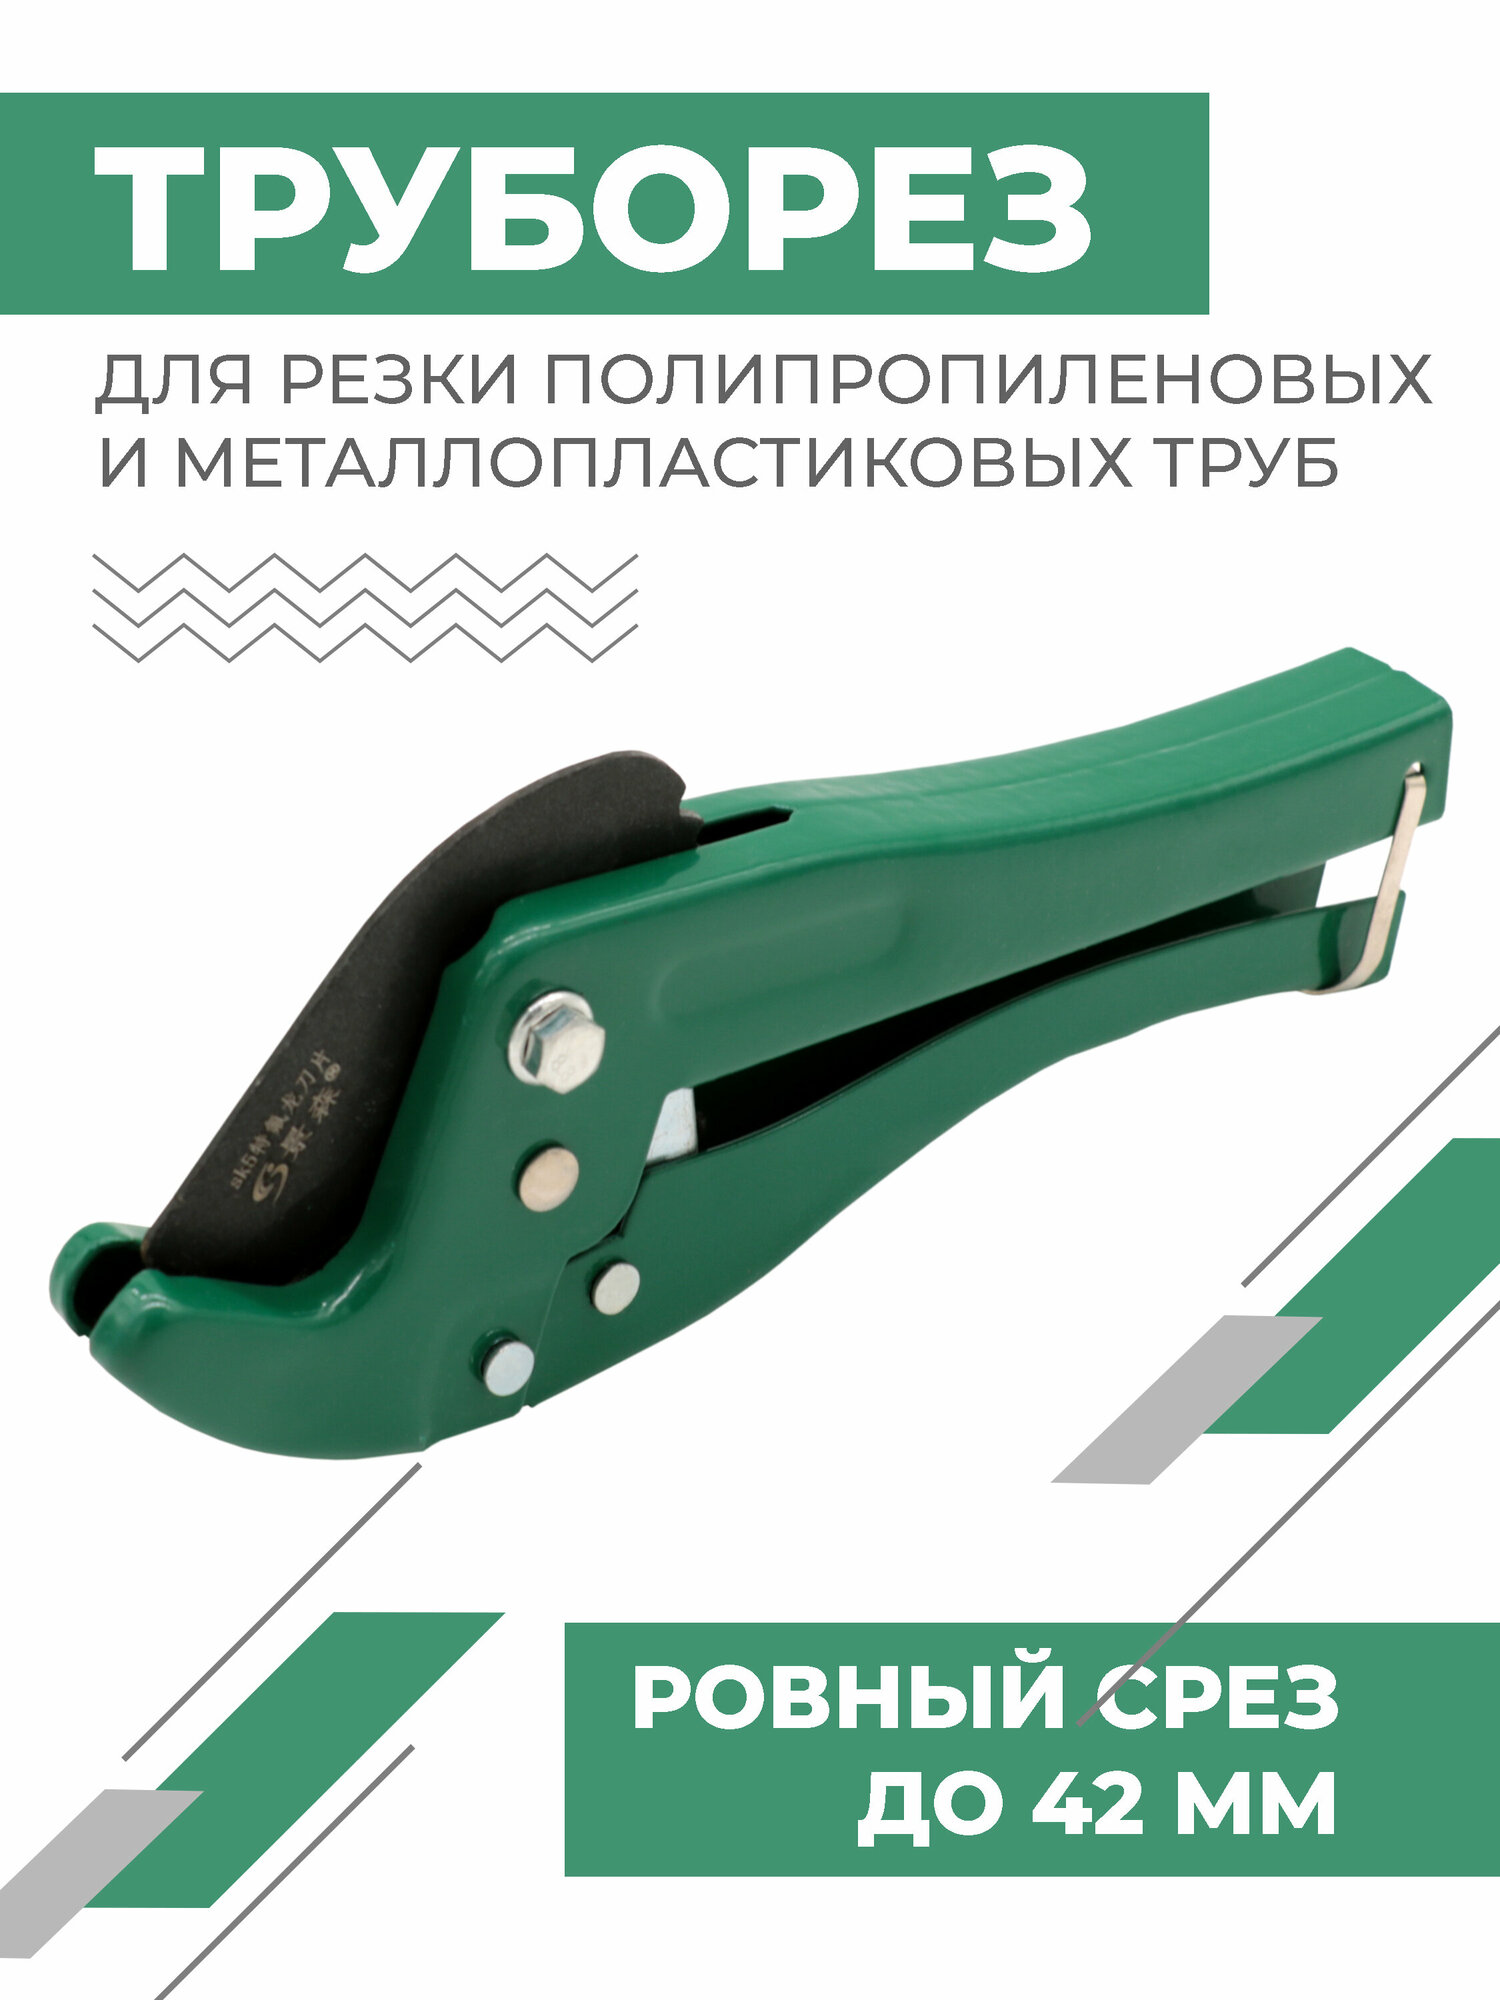 Ножницы для резки пластиковых труб Boomshakalaka до 42 мм.